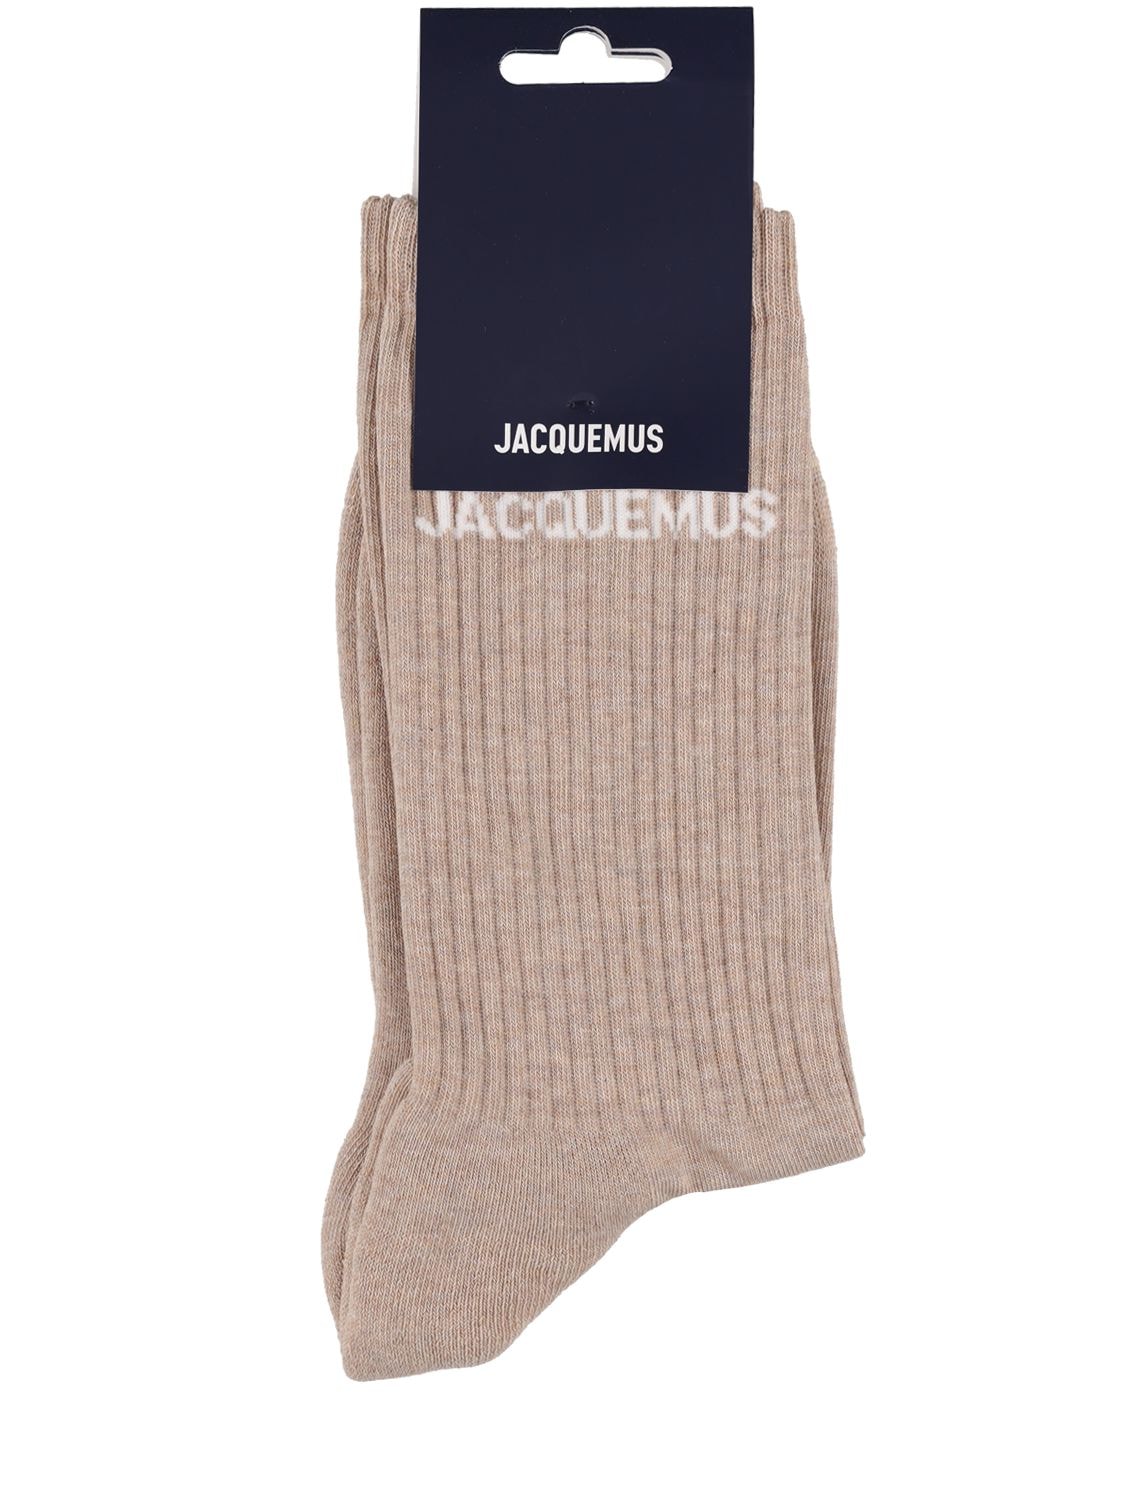 Jacquemus Les Chaussettes Jaquemus Socks In Light Beige